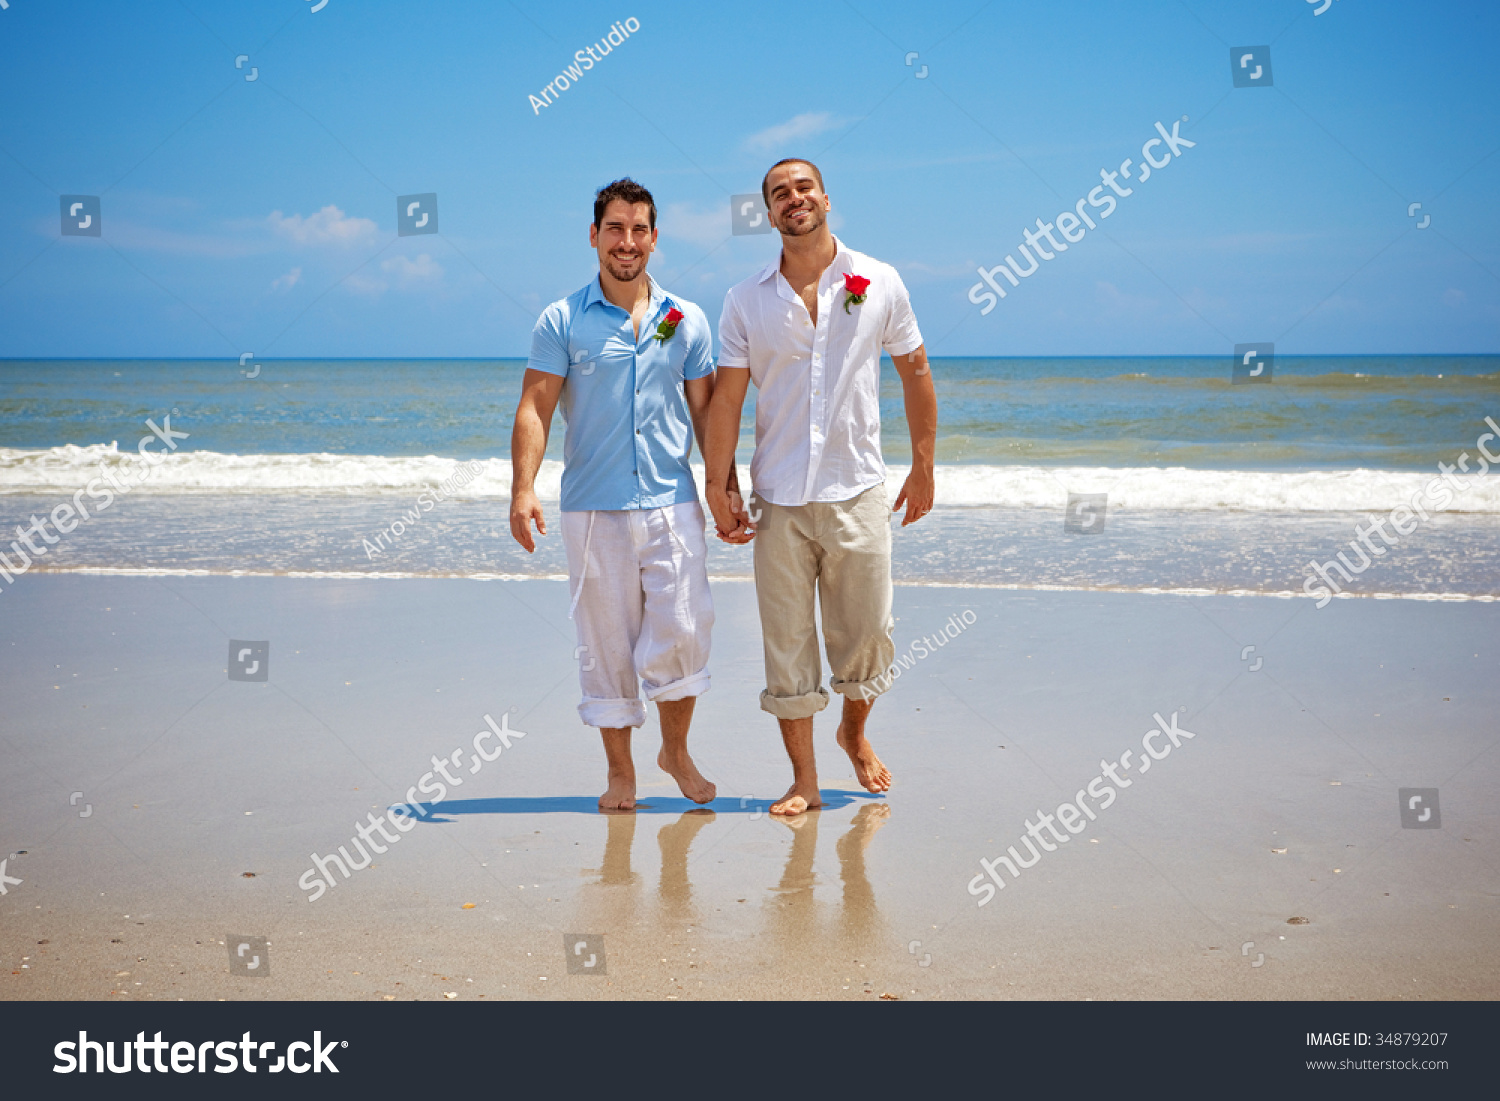 Two Gay Men Walking On Beach Stockfoto Jetzt Bearbeiten 34879207